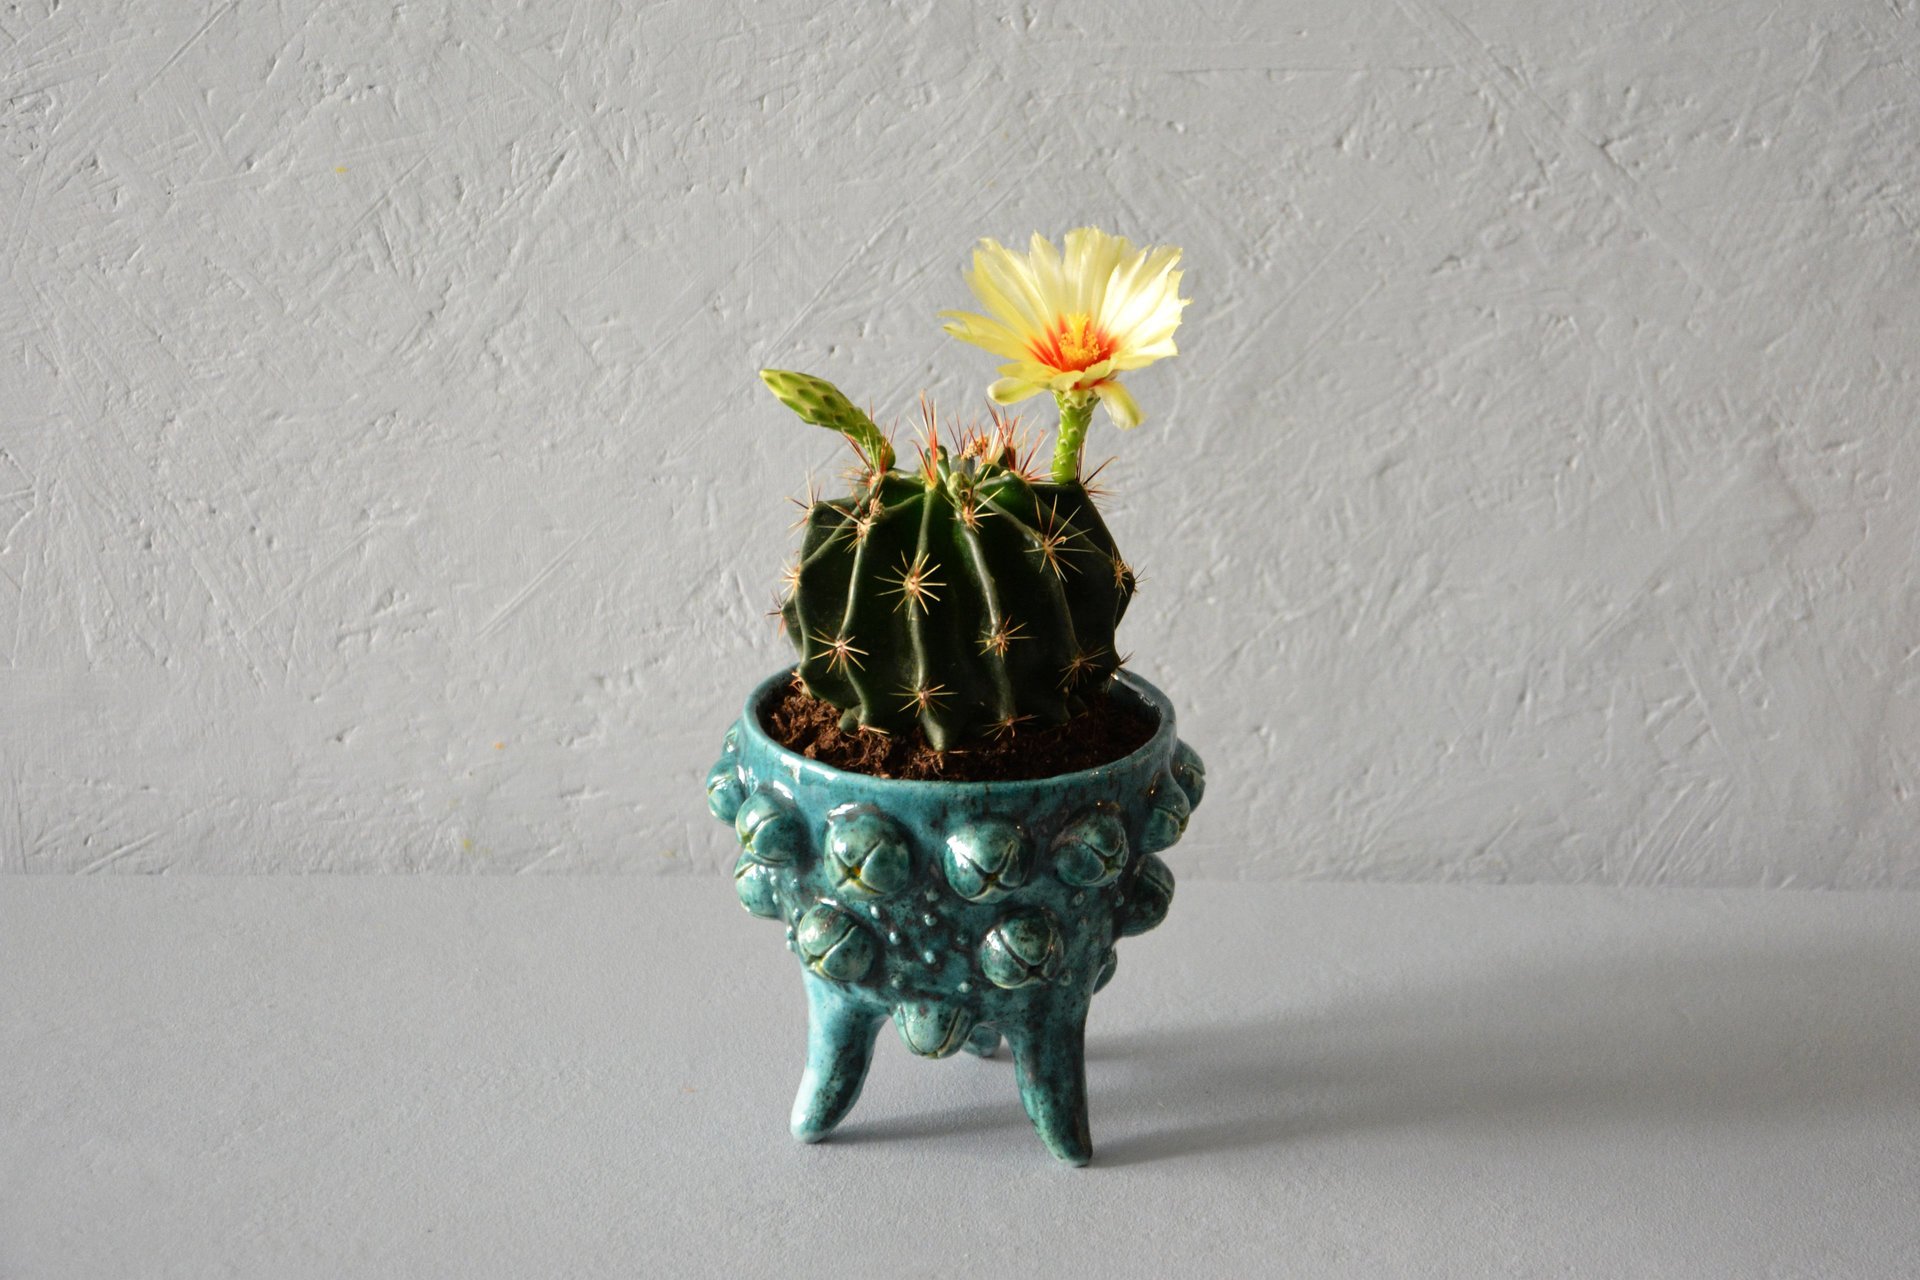 Ceramic cachepot for cactus on the legs Turquoise flicker, diameter - 10 cm, height - 9.5 cm, photo 4 of 4.